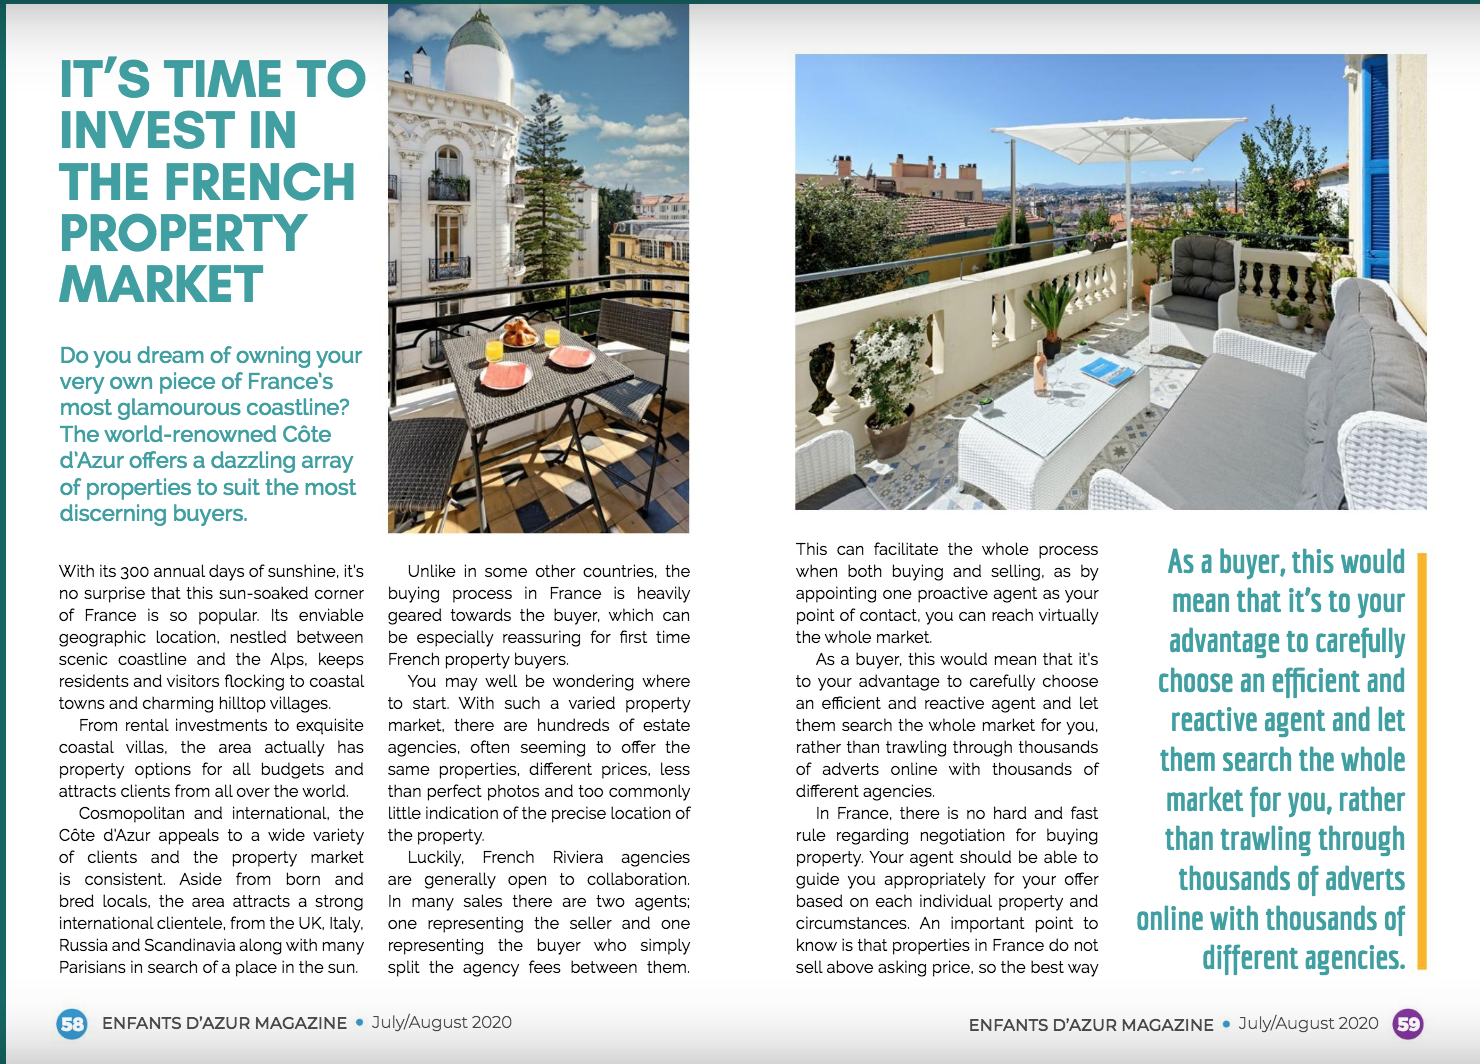 Abitan-Immobilier-enfant-d-azur-magazine-juillet-aout-2020-real-estate-invest-property-french-riviera